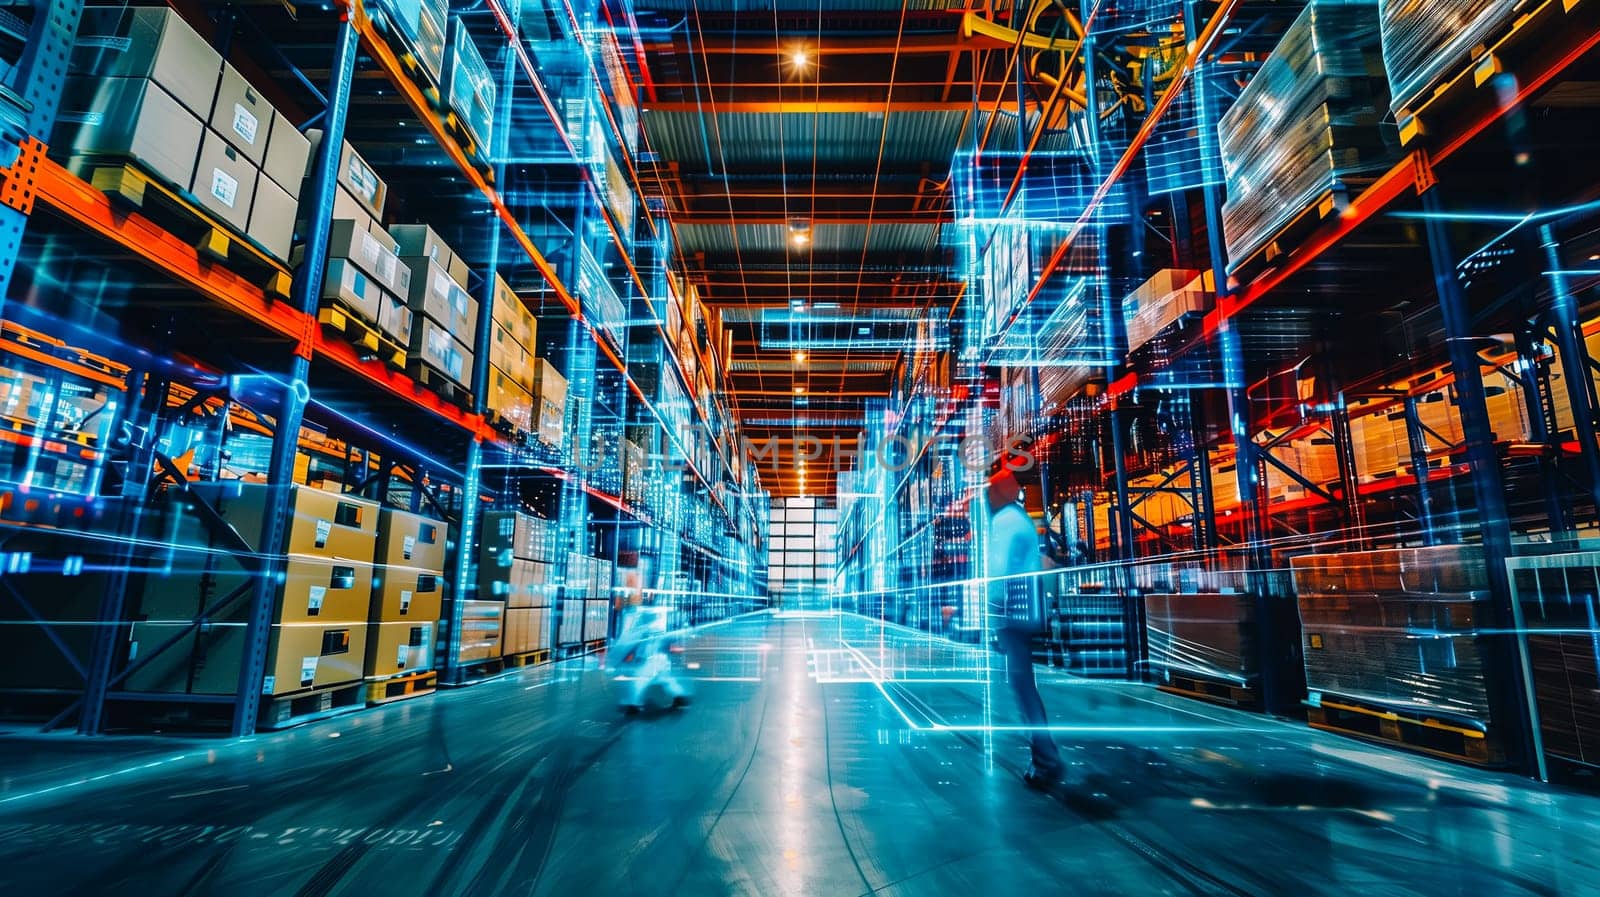 Futuristic Technology Retail Warehouse. by sarymsakov